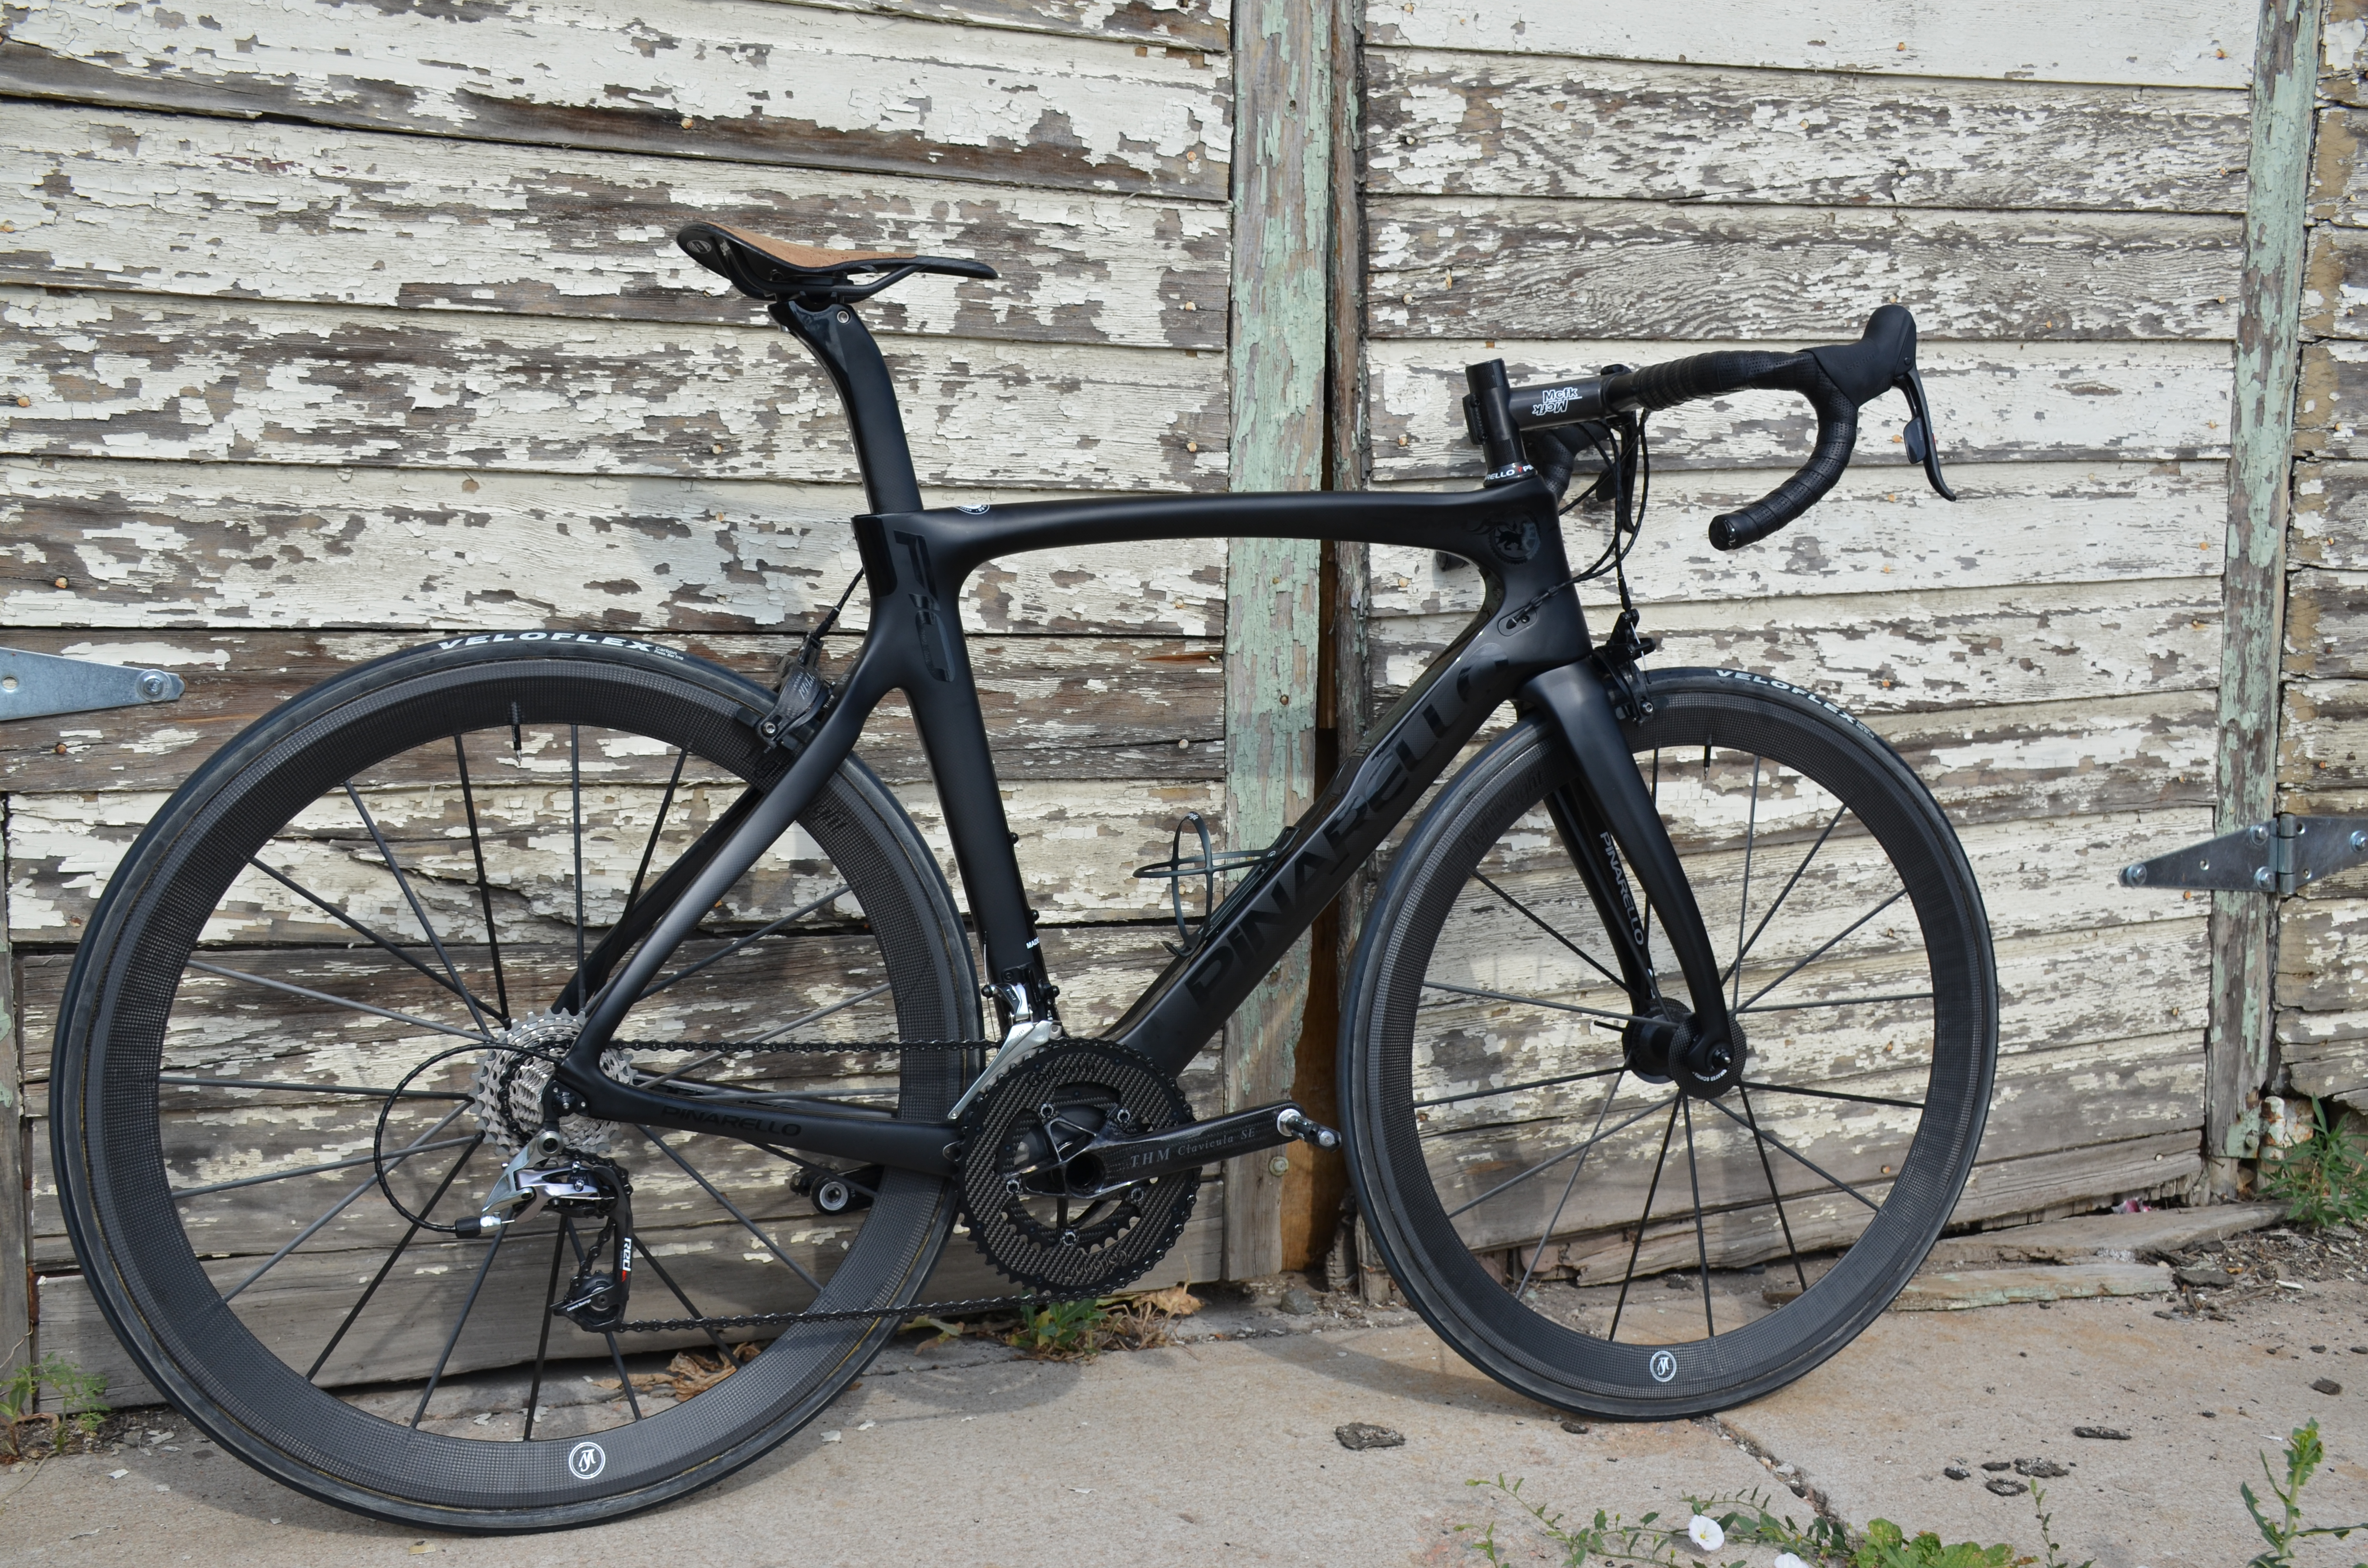 full black bike